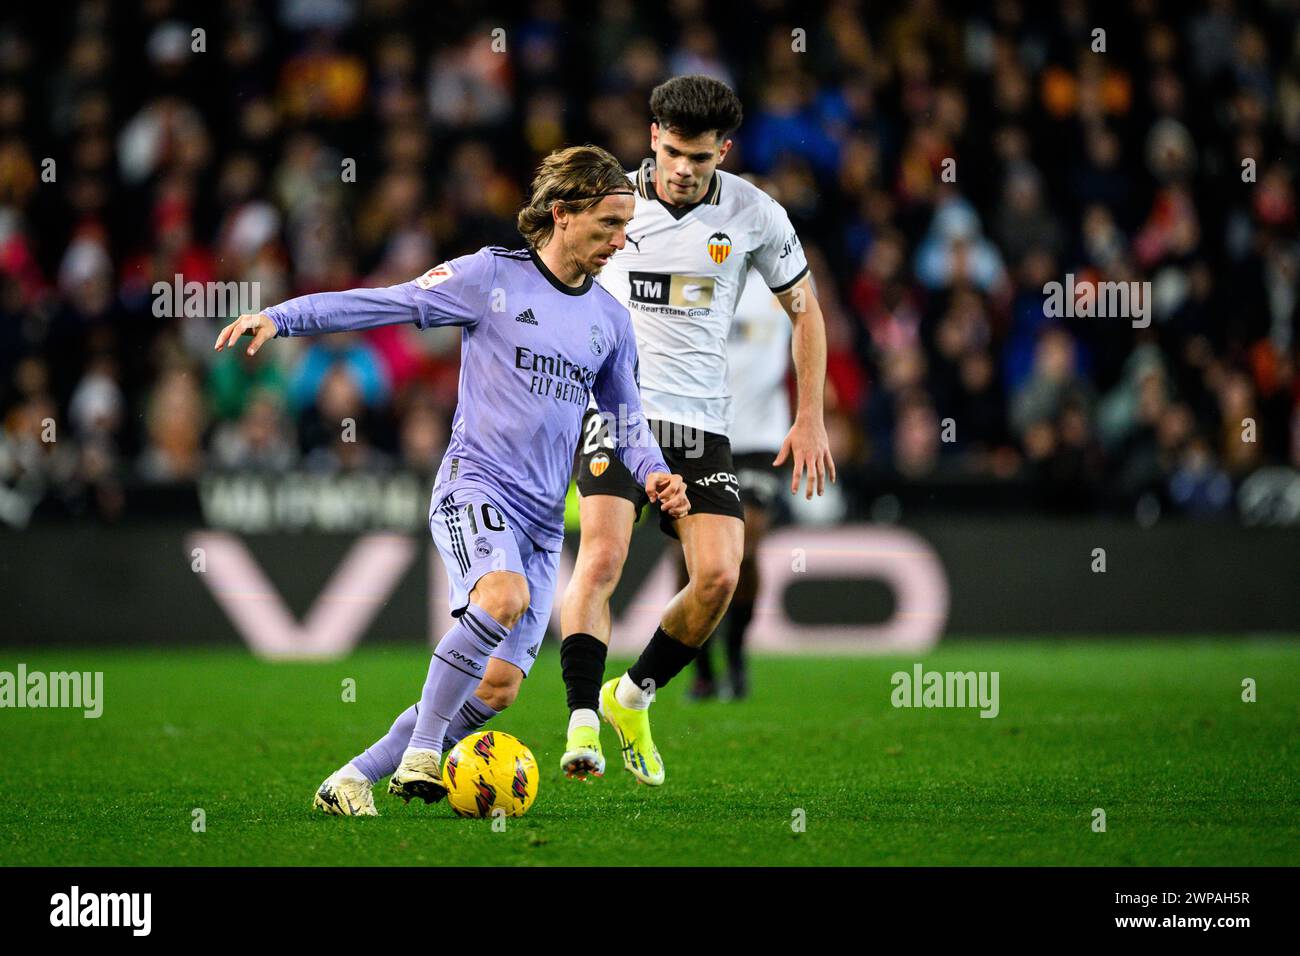 Real Madrid's Croatian player Luka Modric during the match against Valencia Club de Futbol in Mestalla, Valencia, Spain. Stock Photo